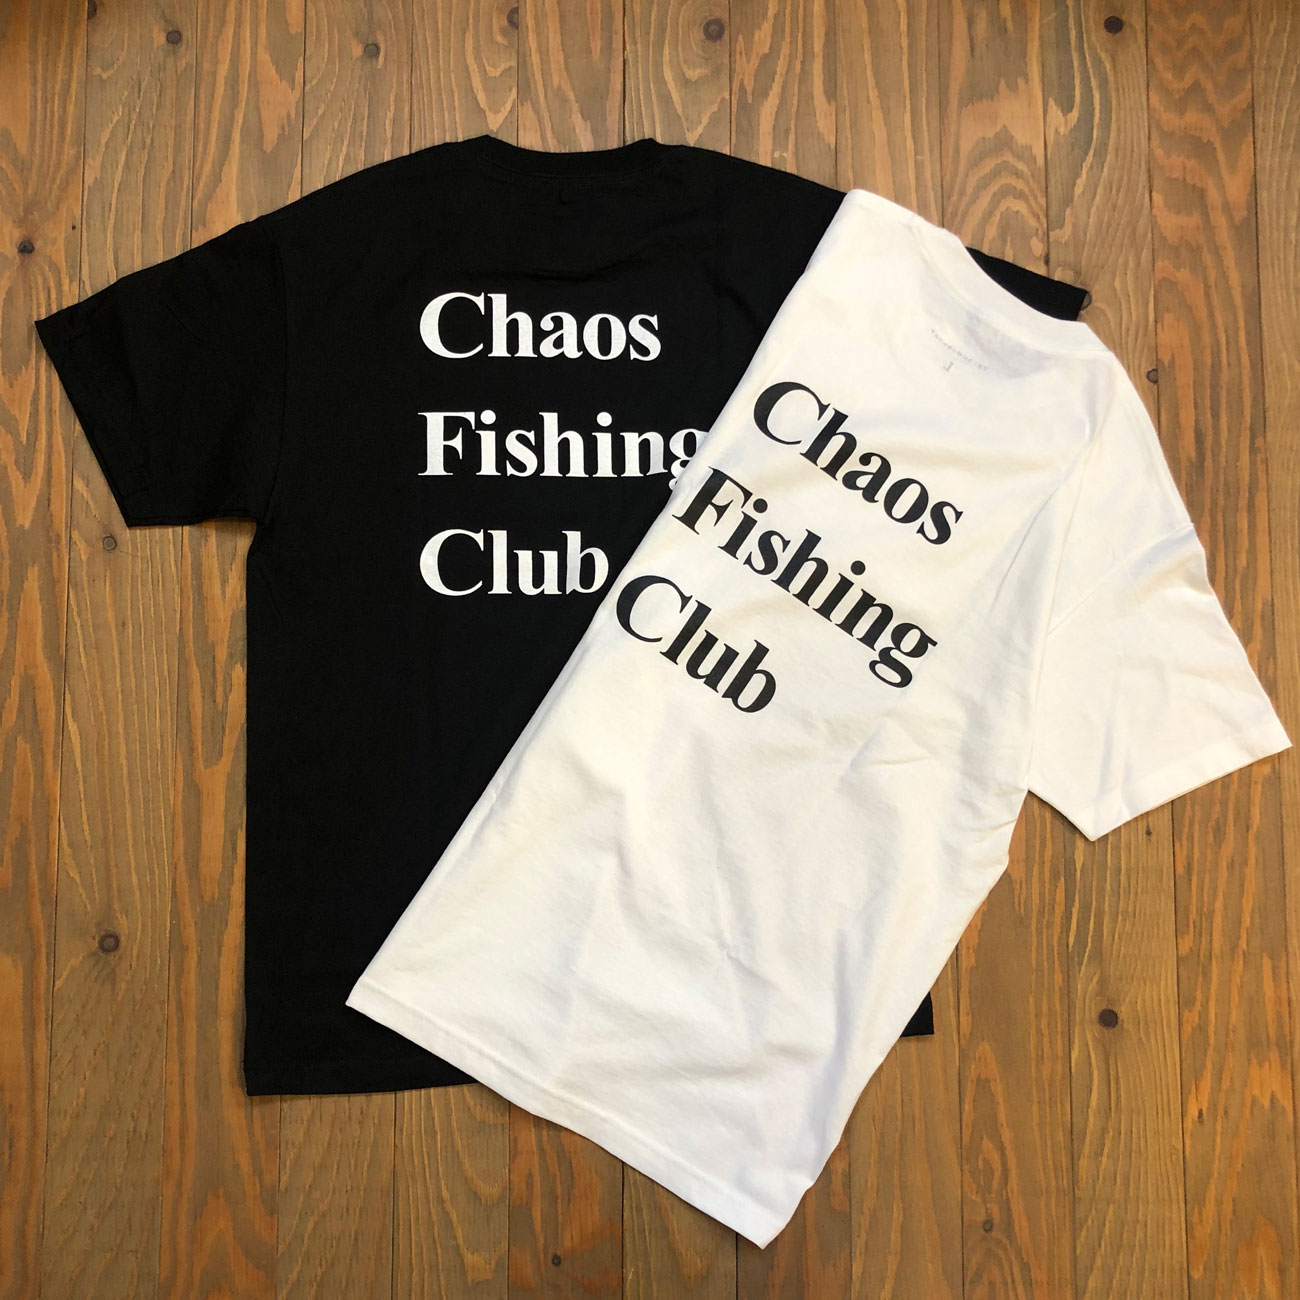 CHAOS FISHING CLUBのTEE入荷しました🎣